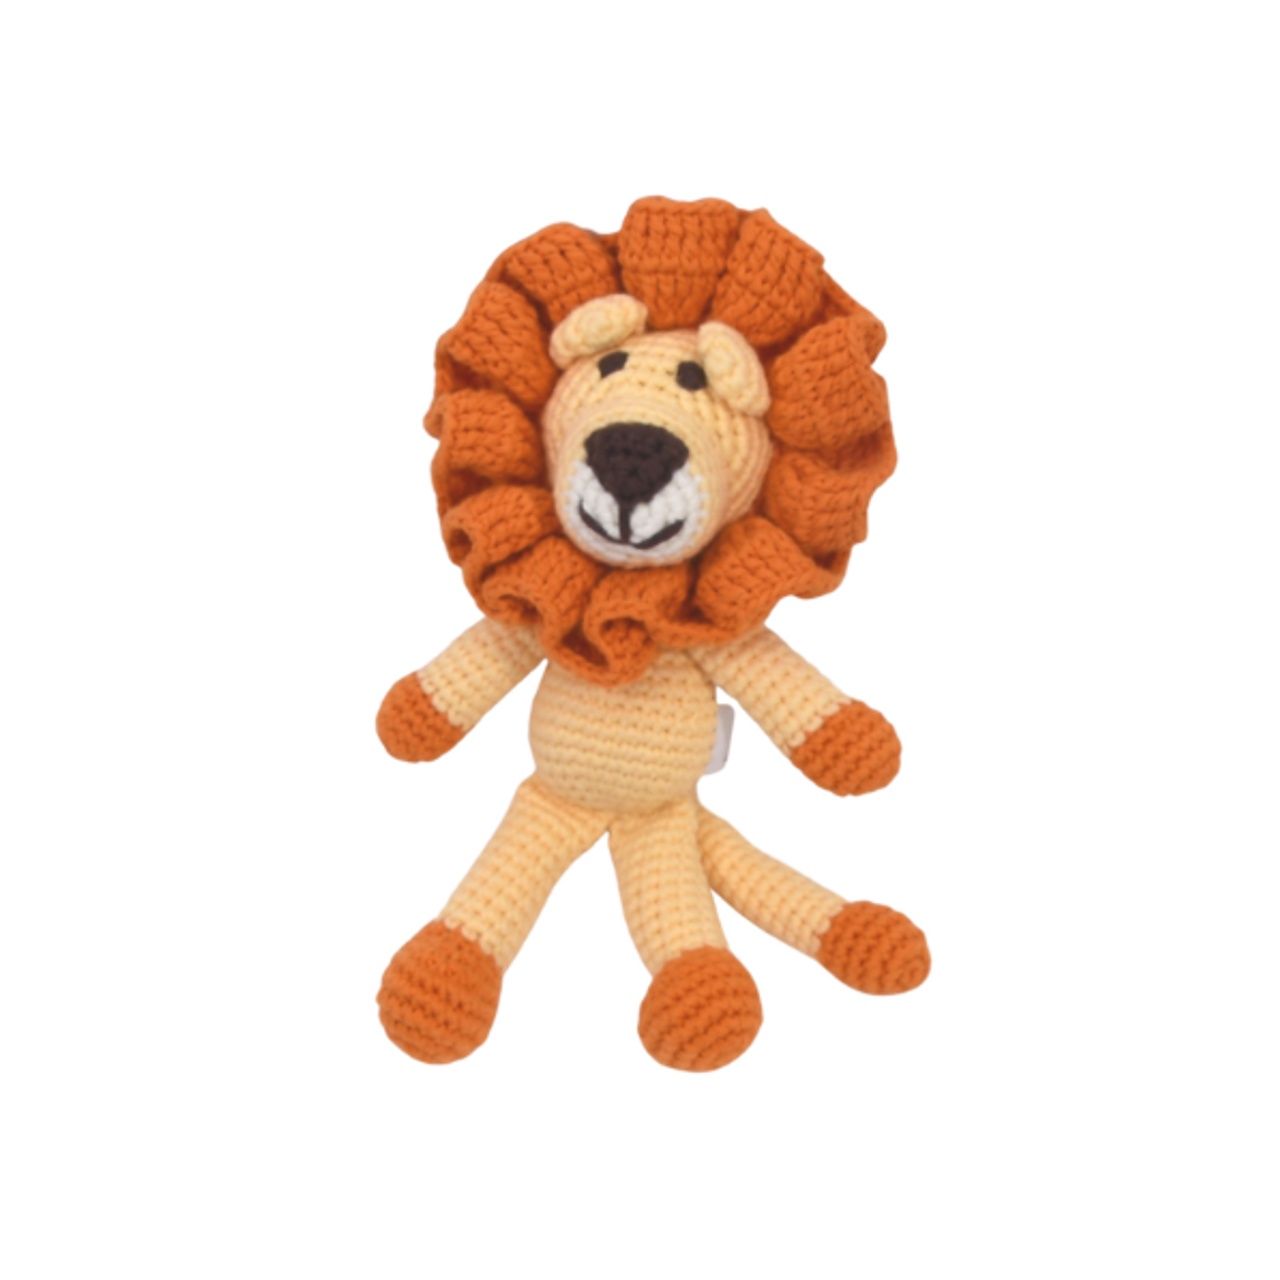 Mini Organic Lion Toy - Stuffed Animal - 8